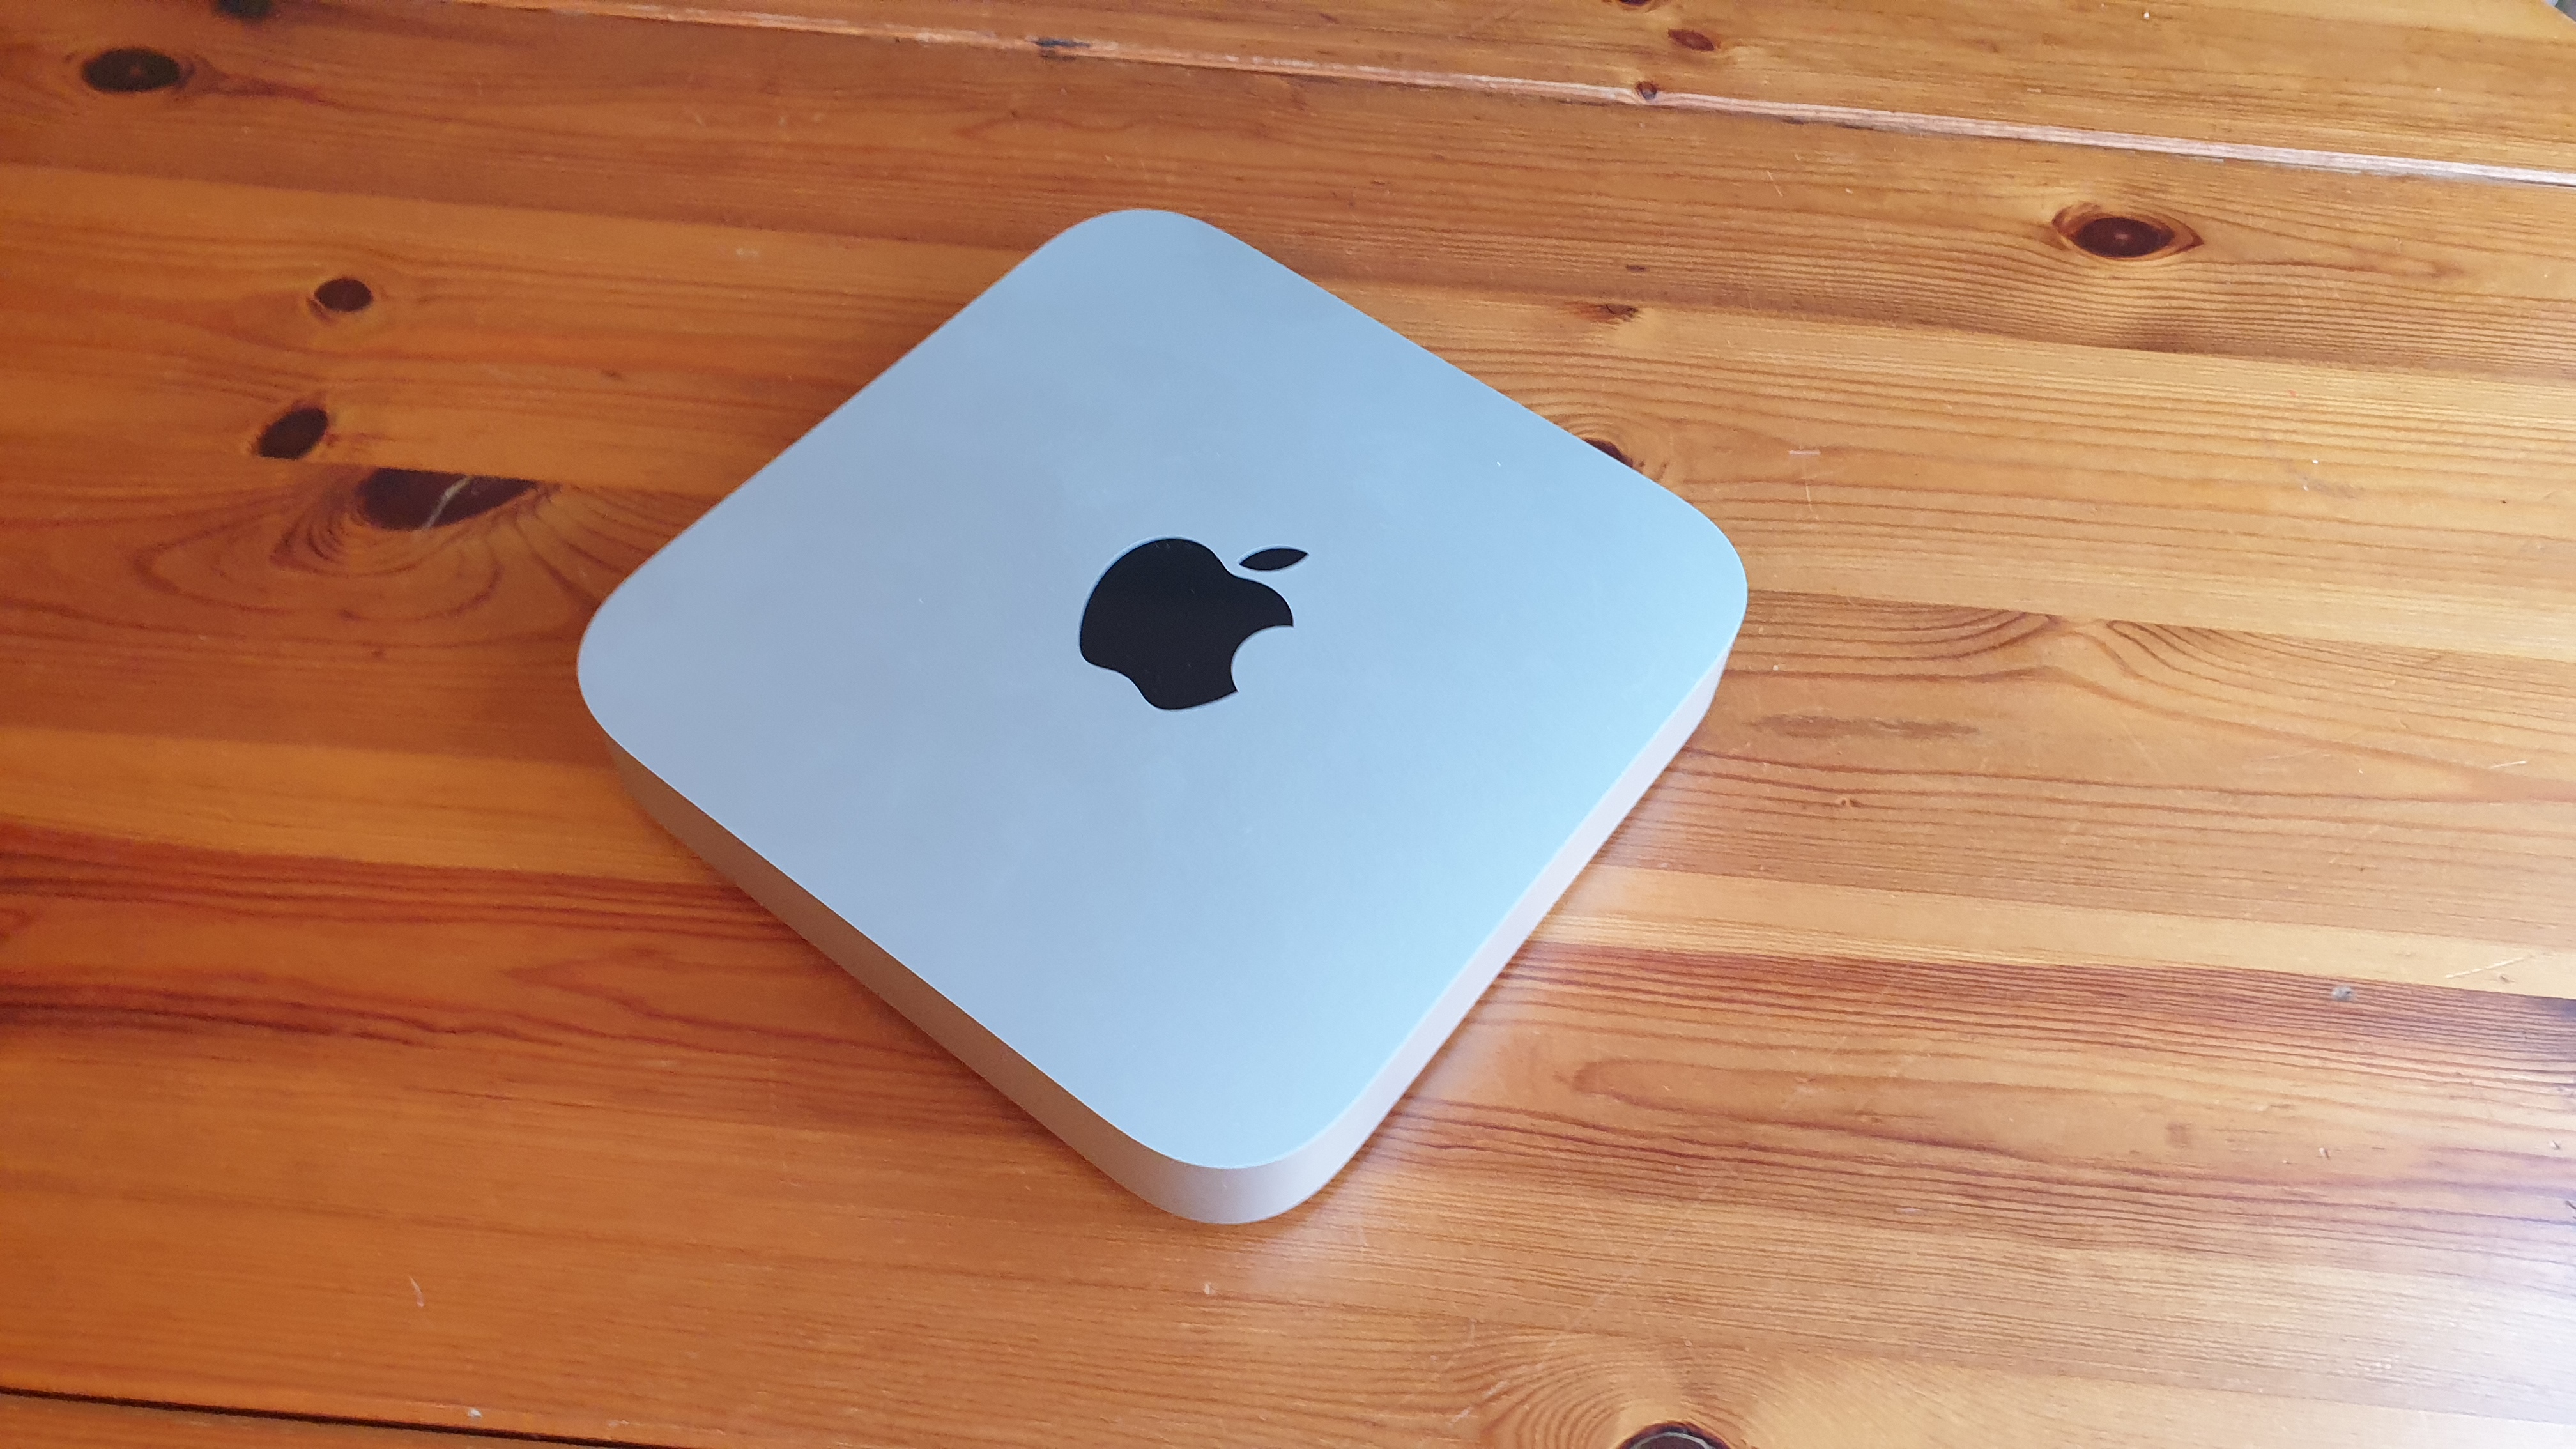 apple mac mini for video editing?